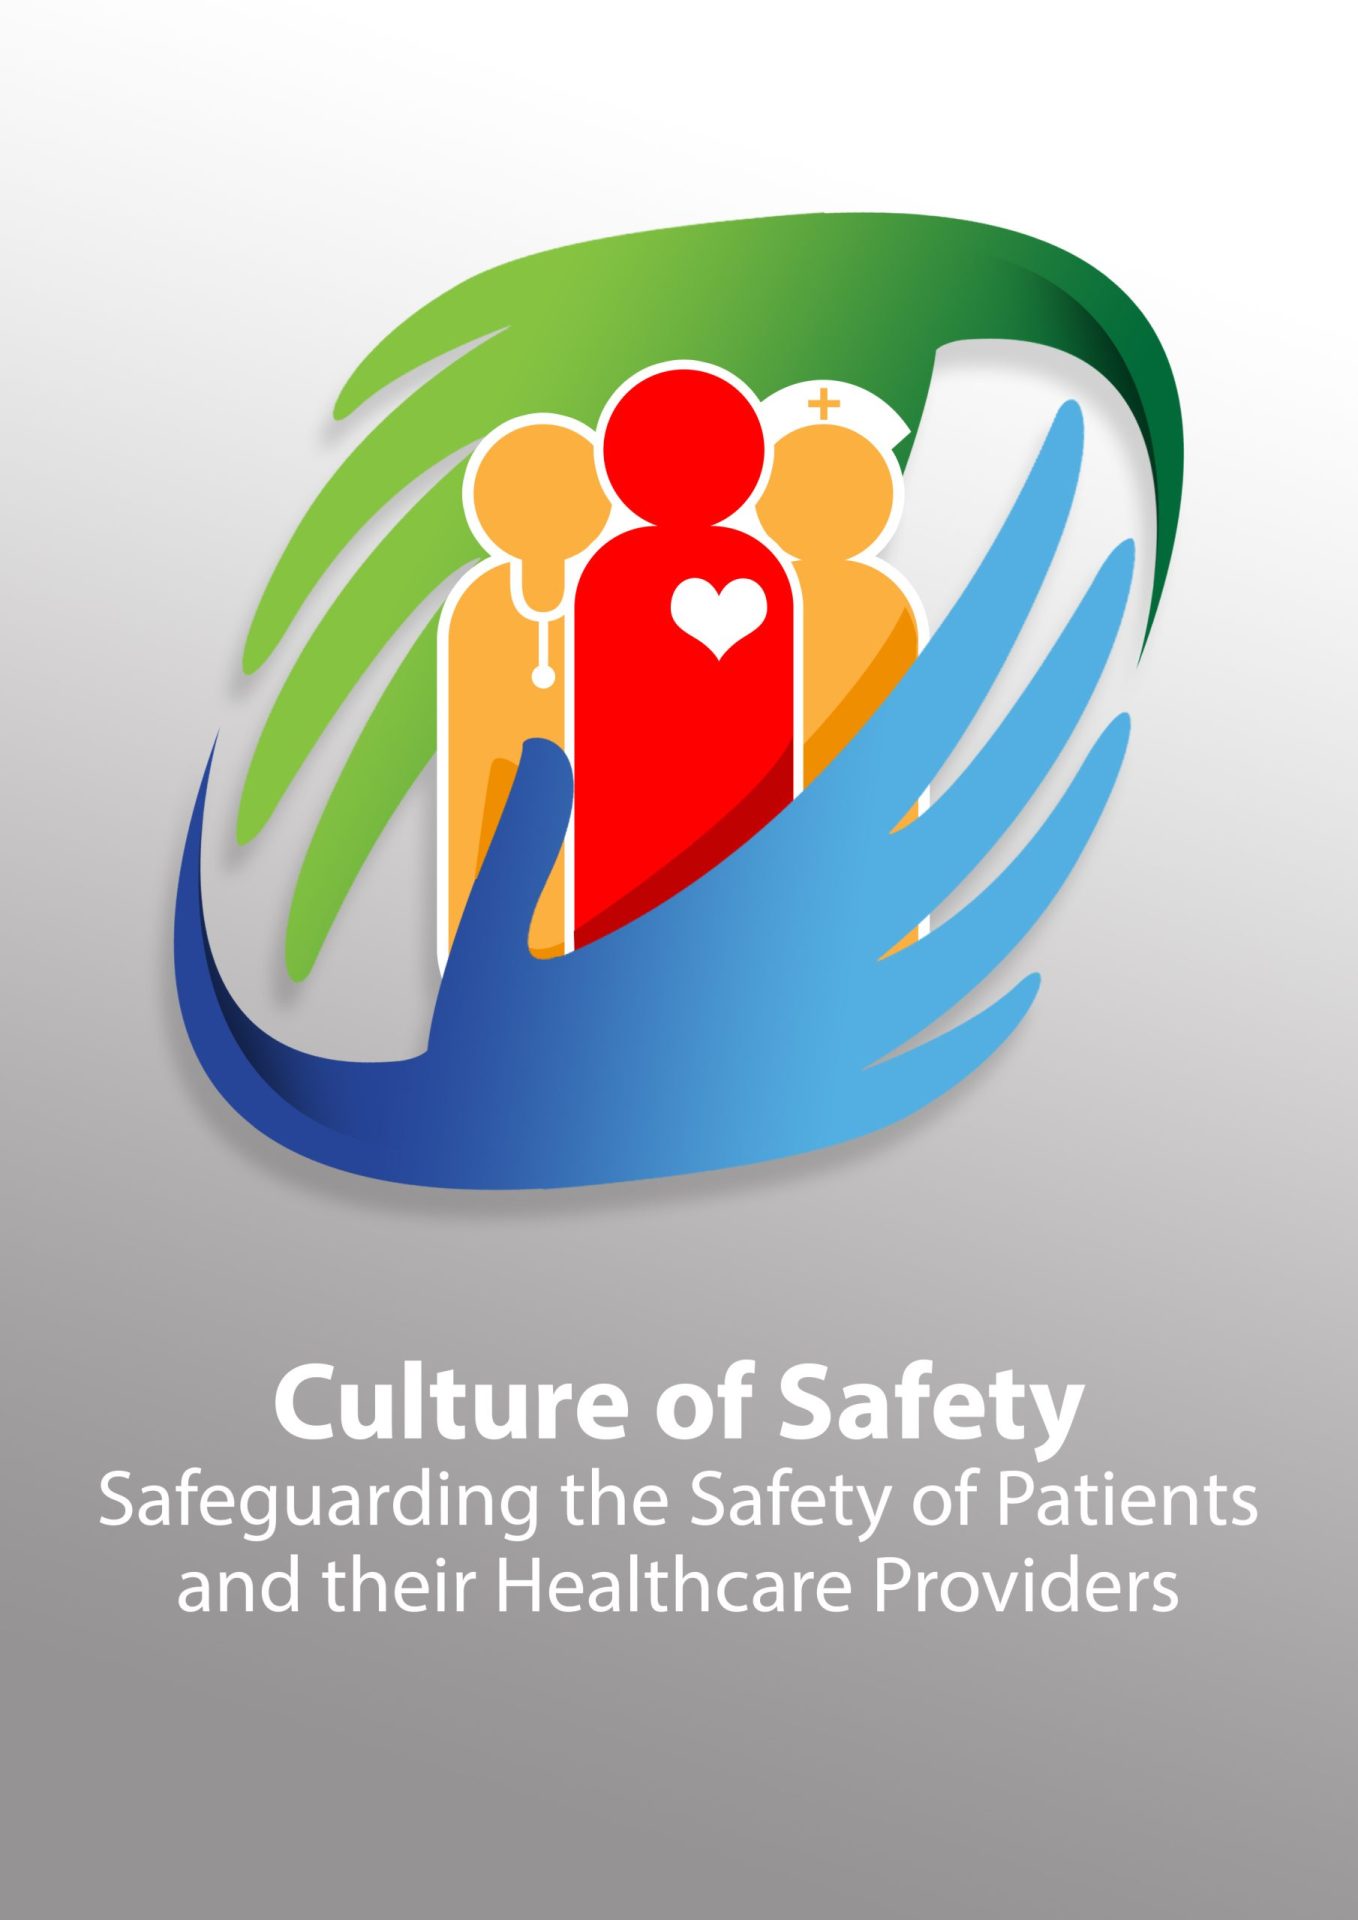 safety logo ideas 2